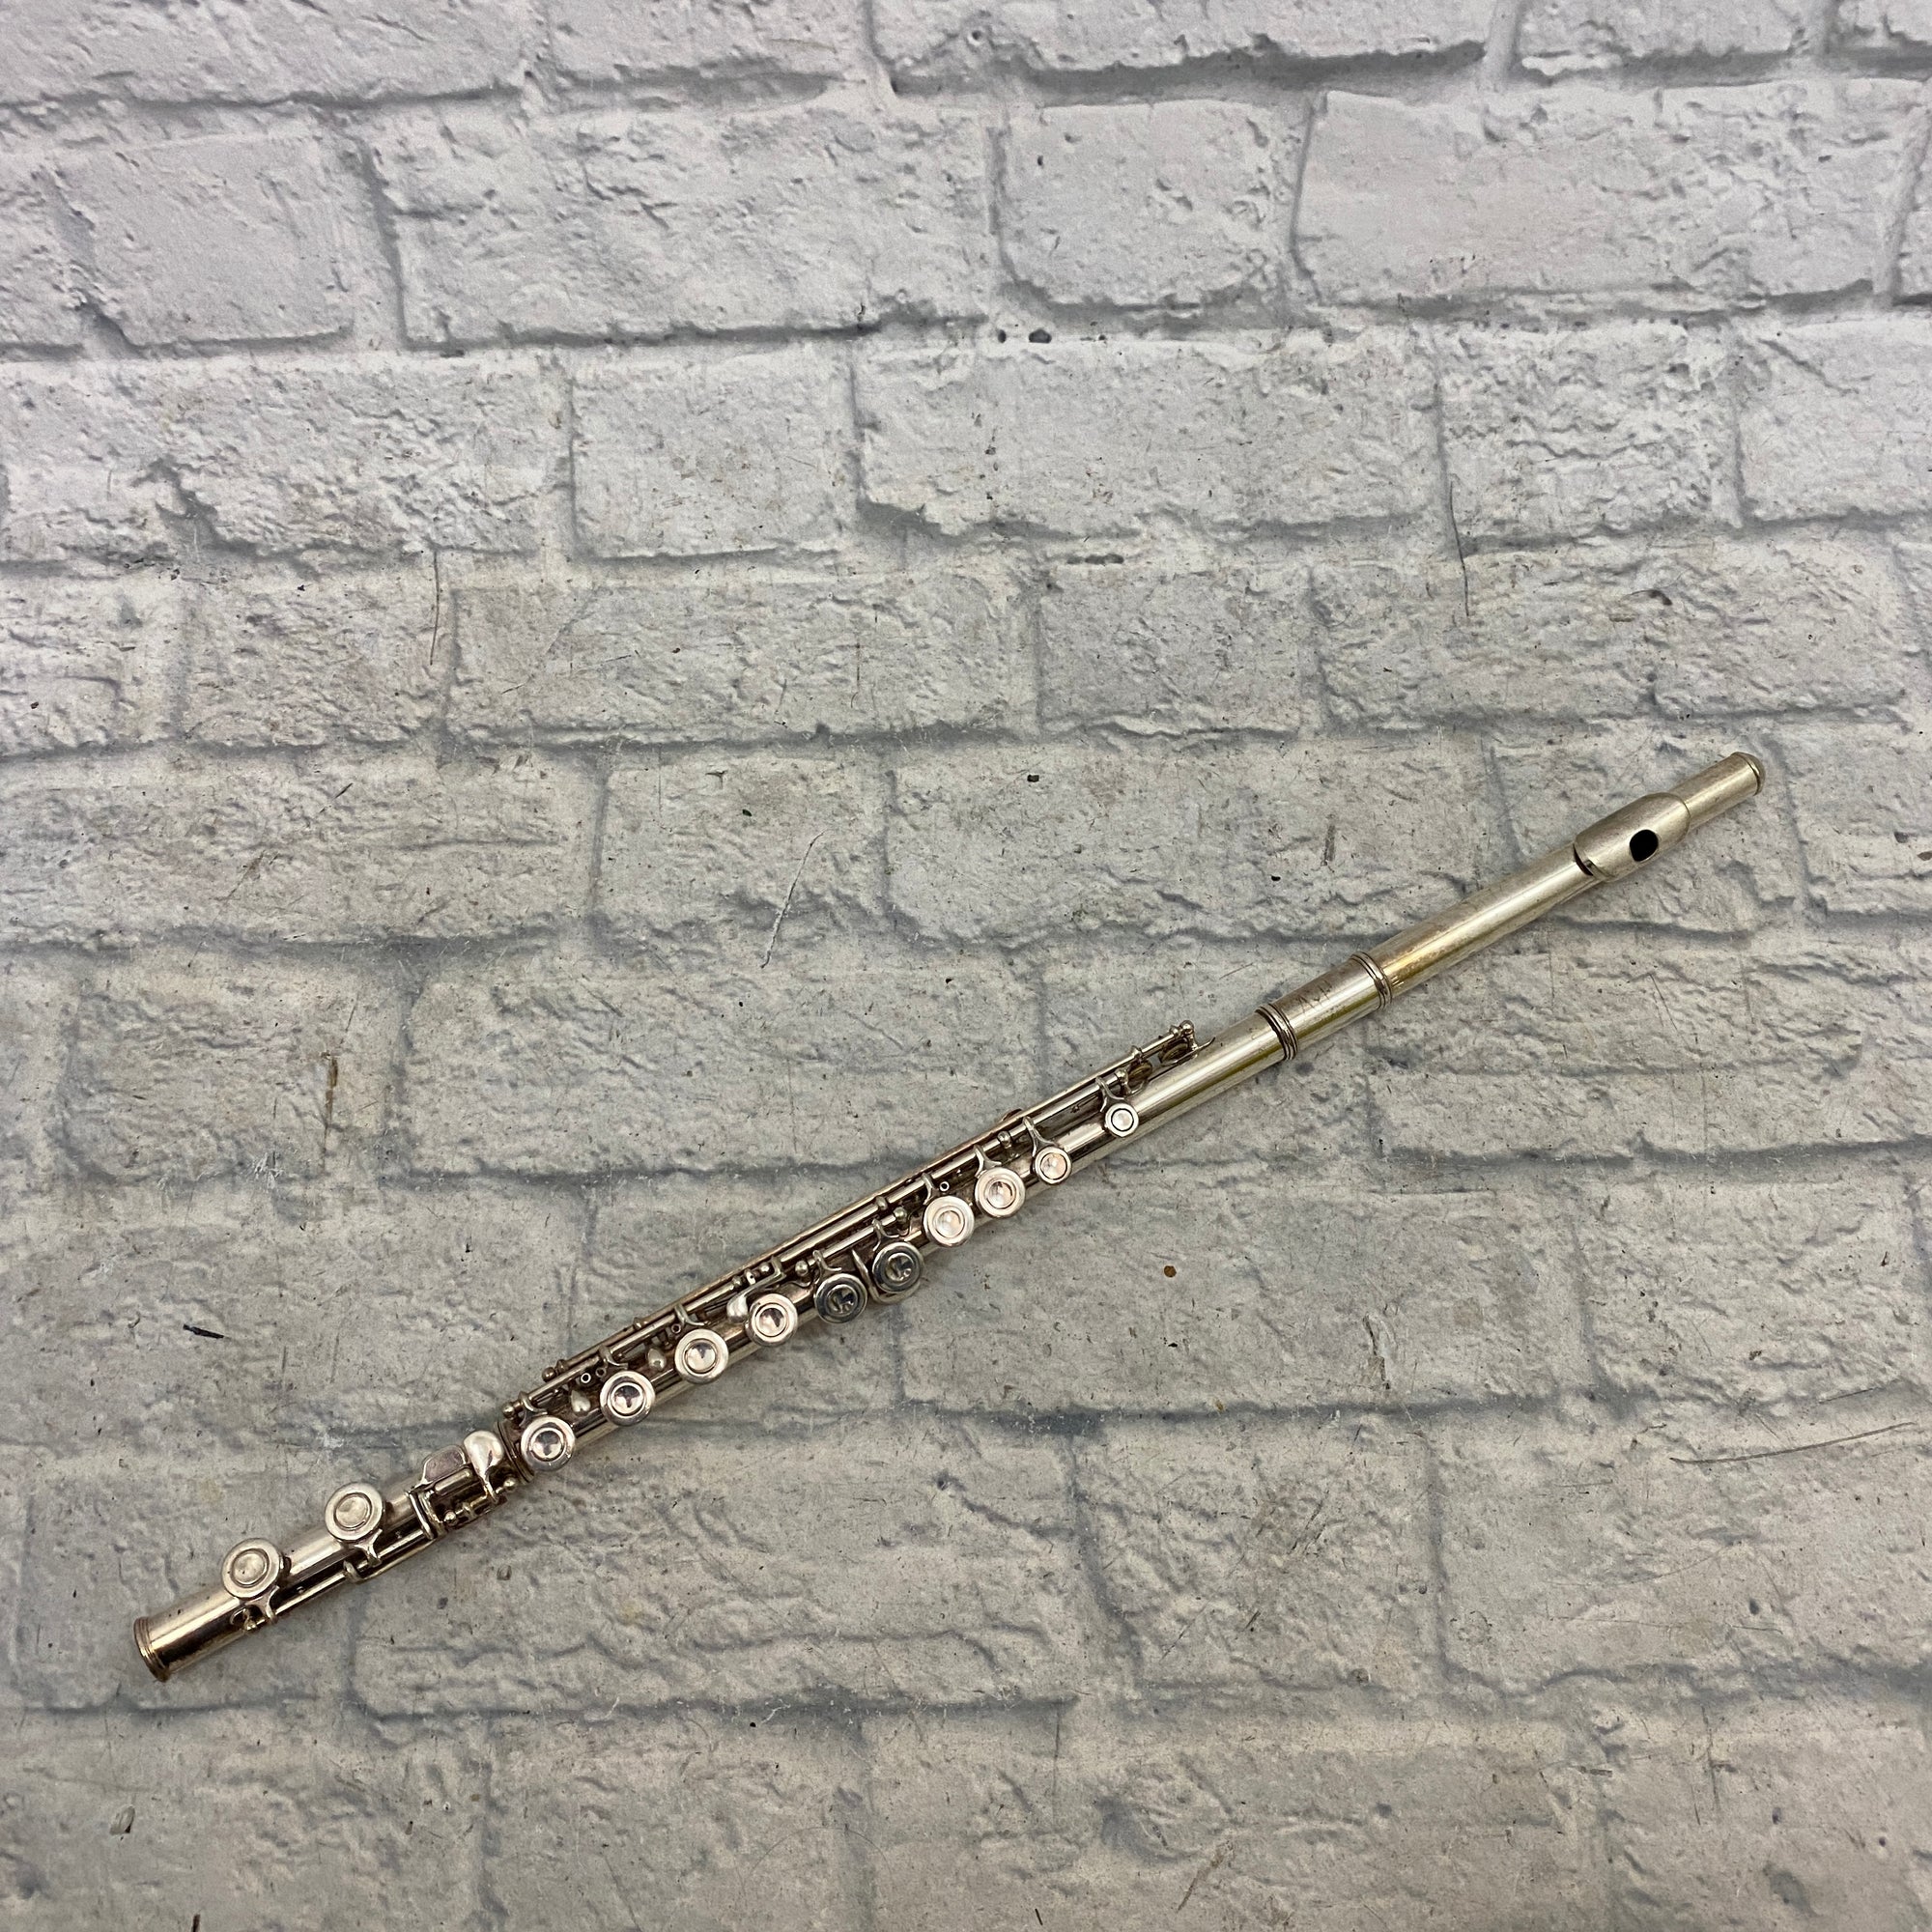 elkhart artley flute